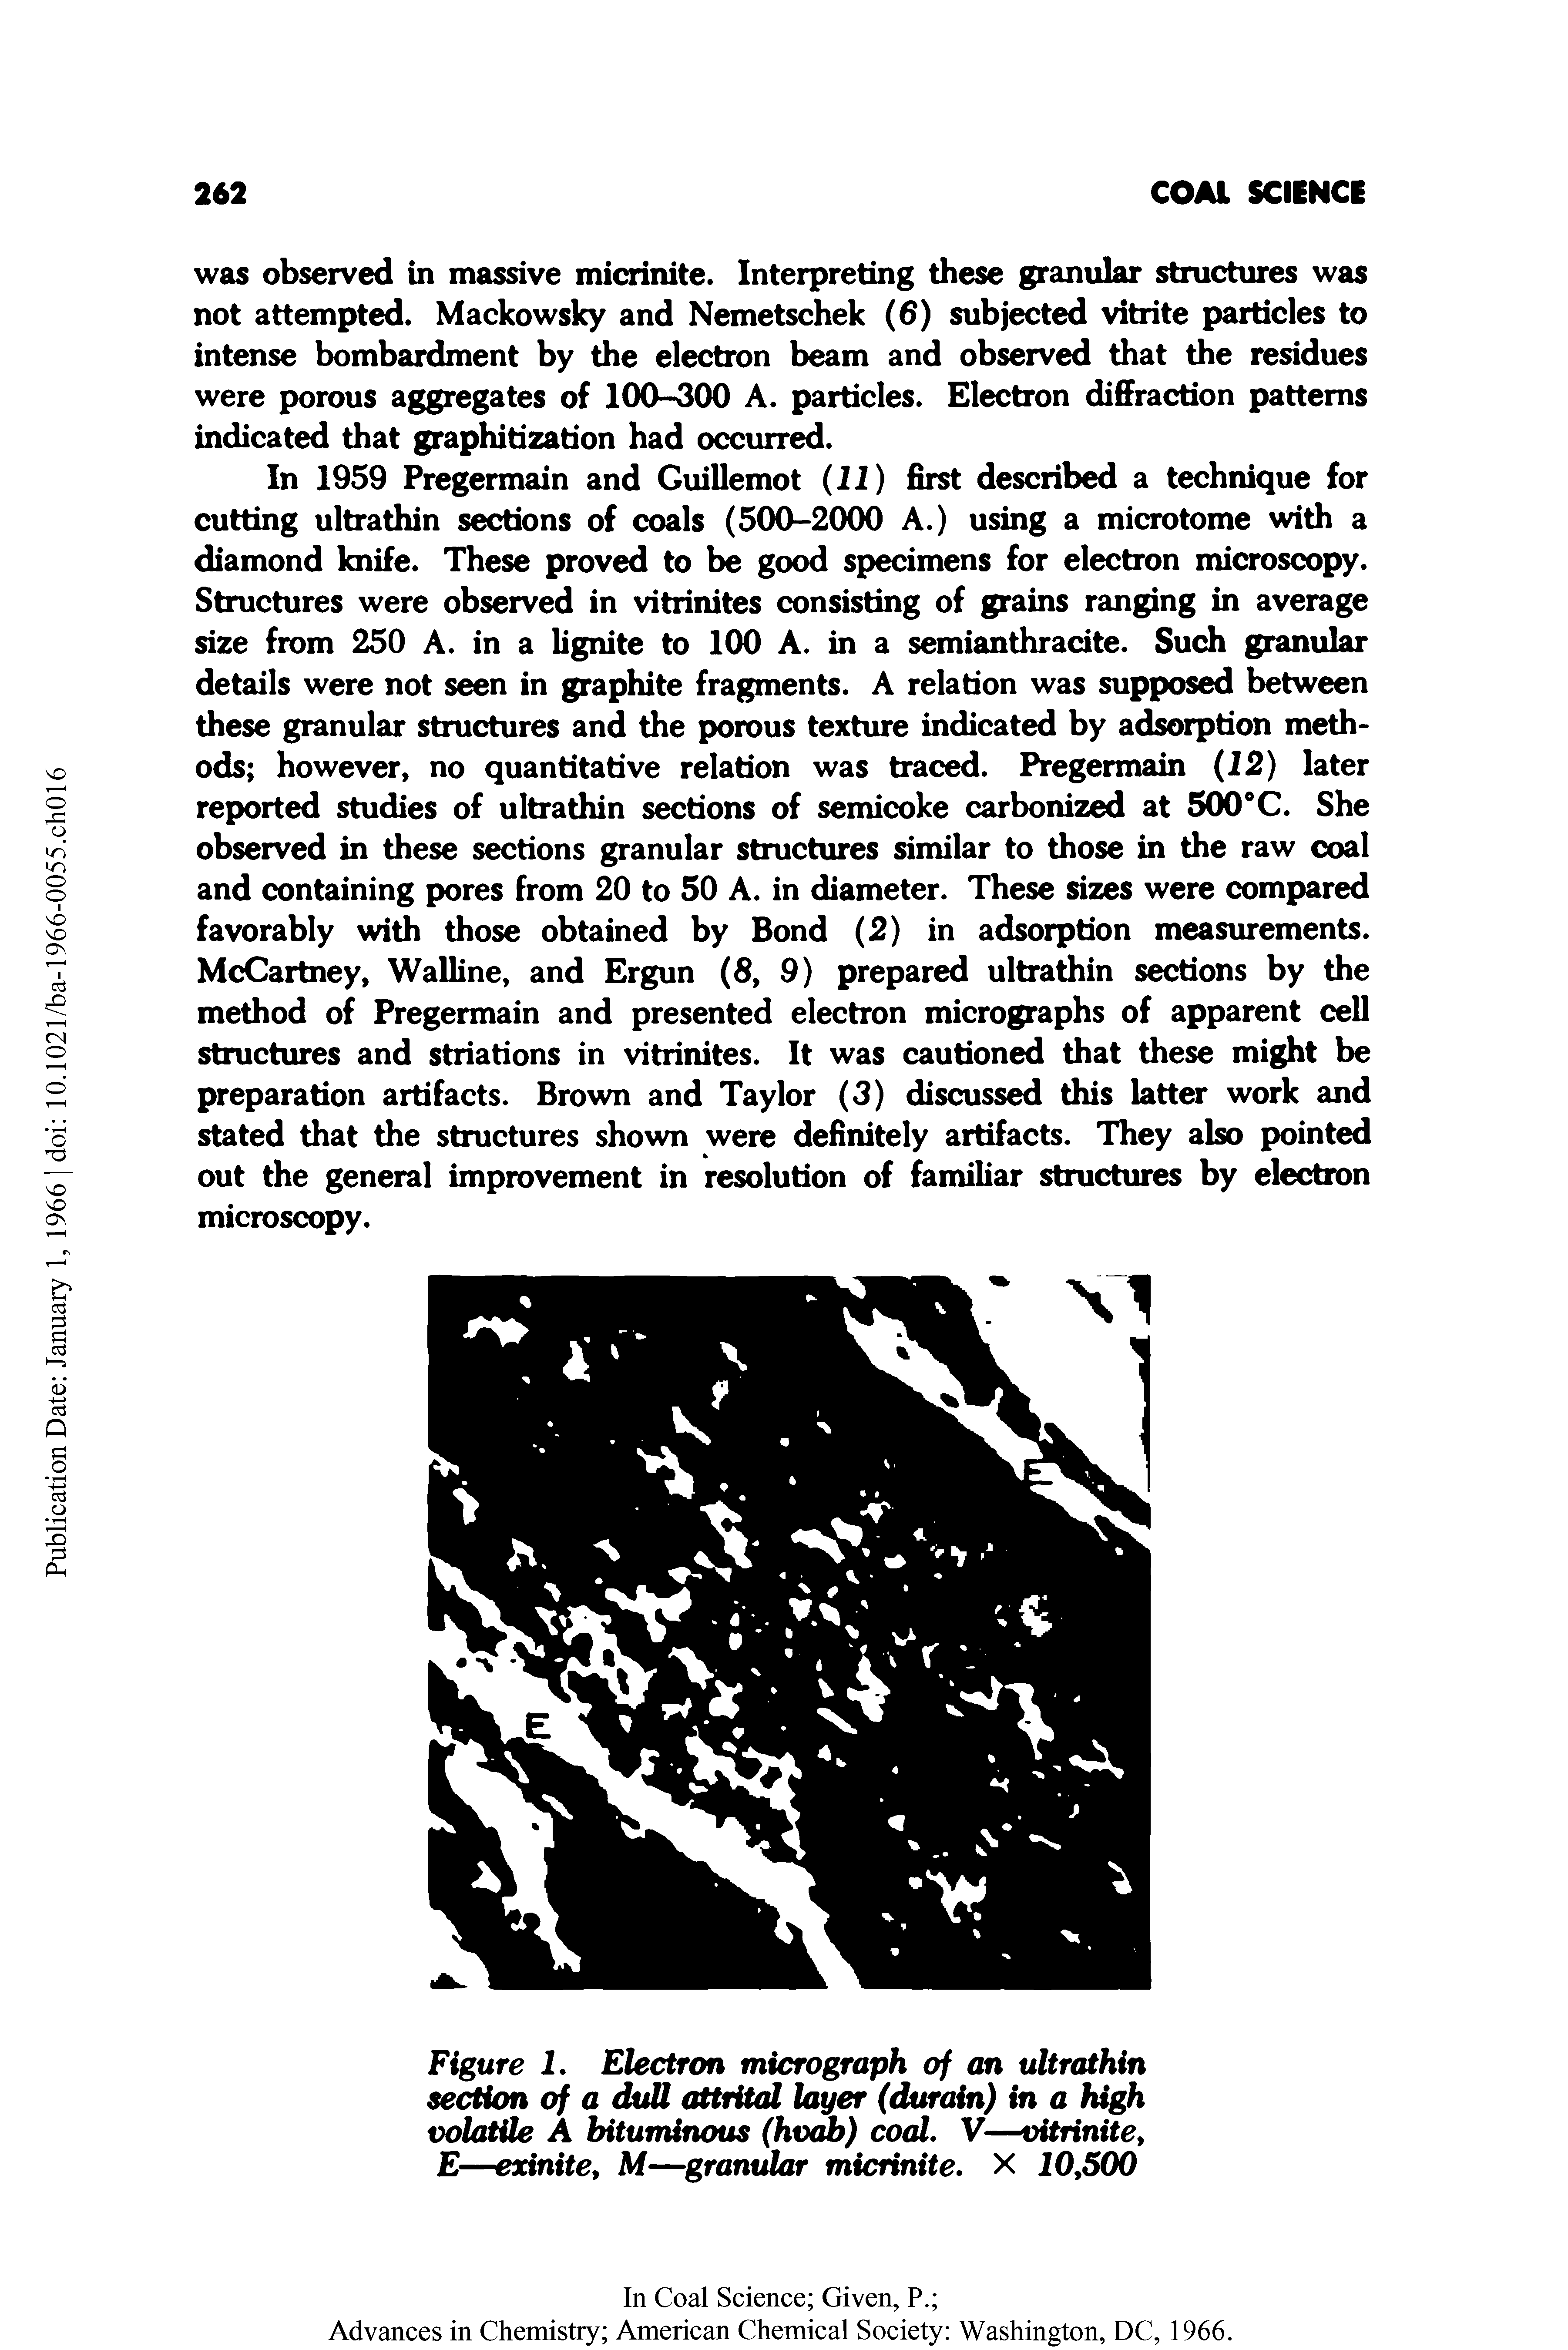 Figure 1. Electron micrograph of an ultrathin section of a dull attrital layer (durain) in a high volatile A bituminous (hvab) coal. V—vitrinitey E—exinite, M—granular micrinite. X 10,500...